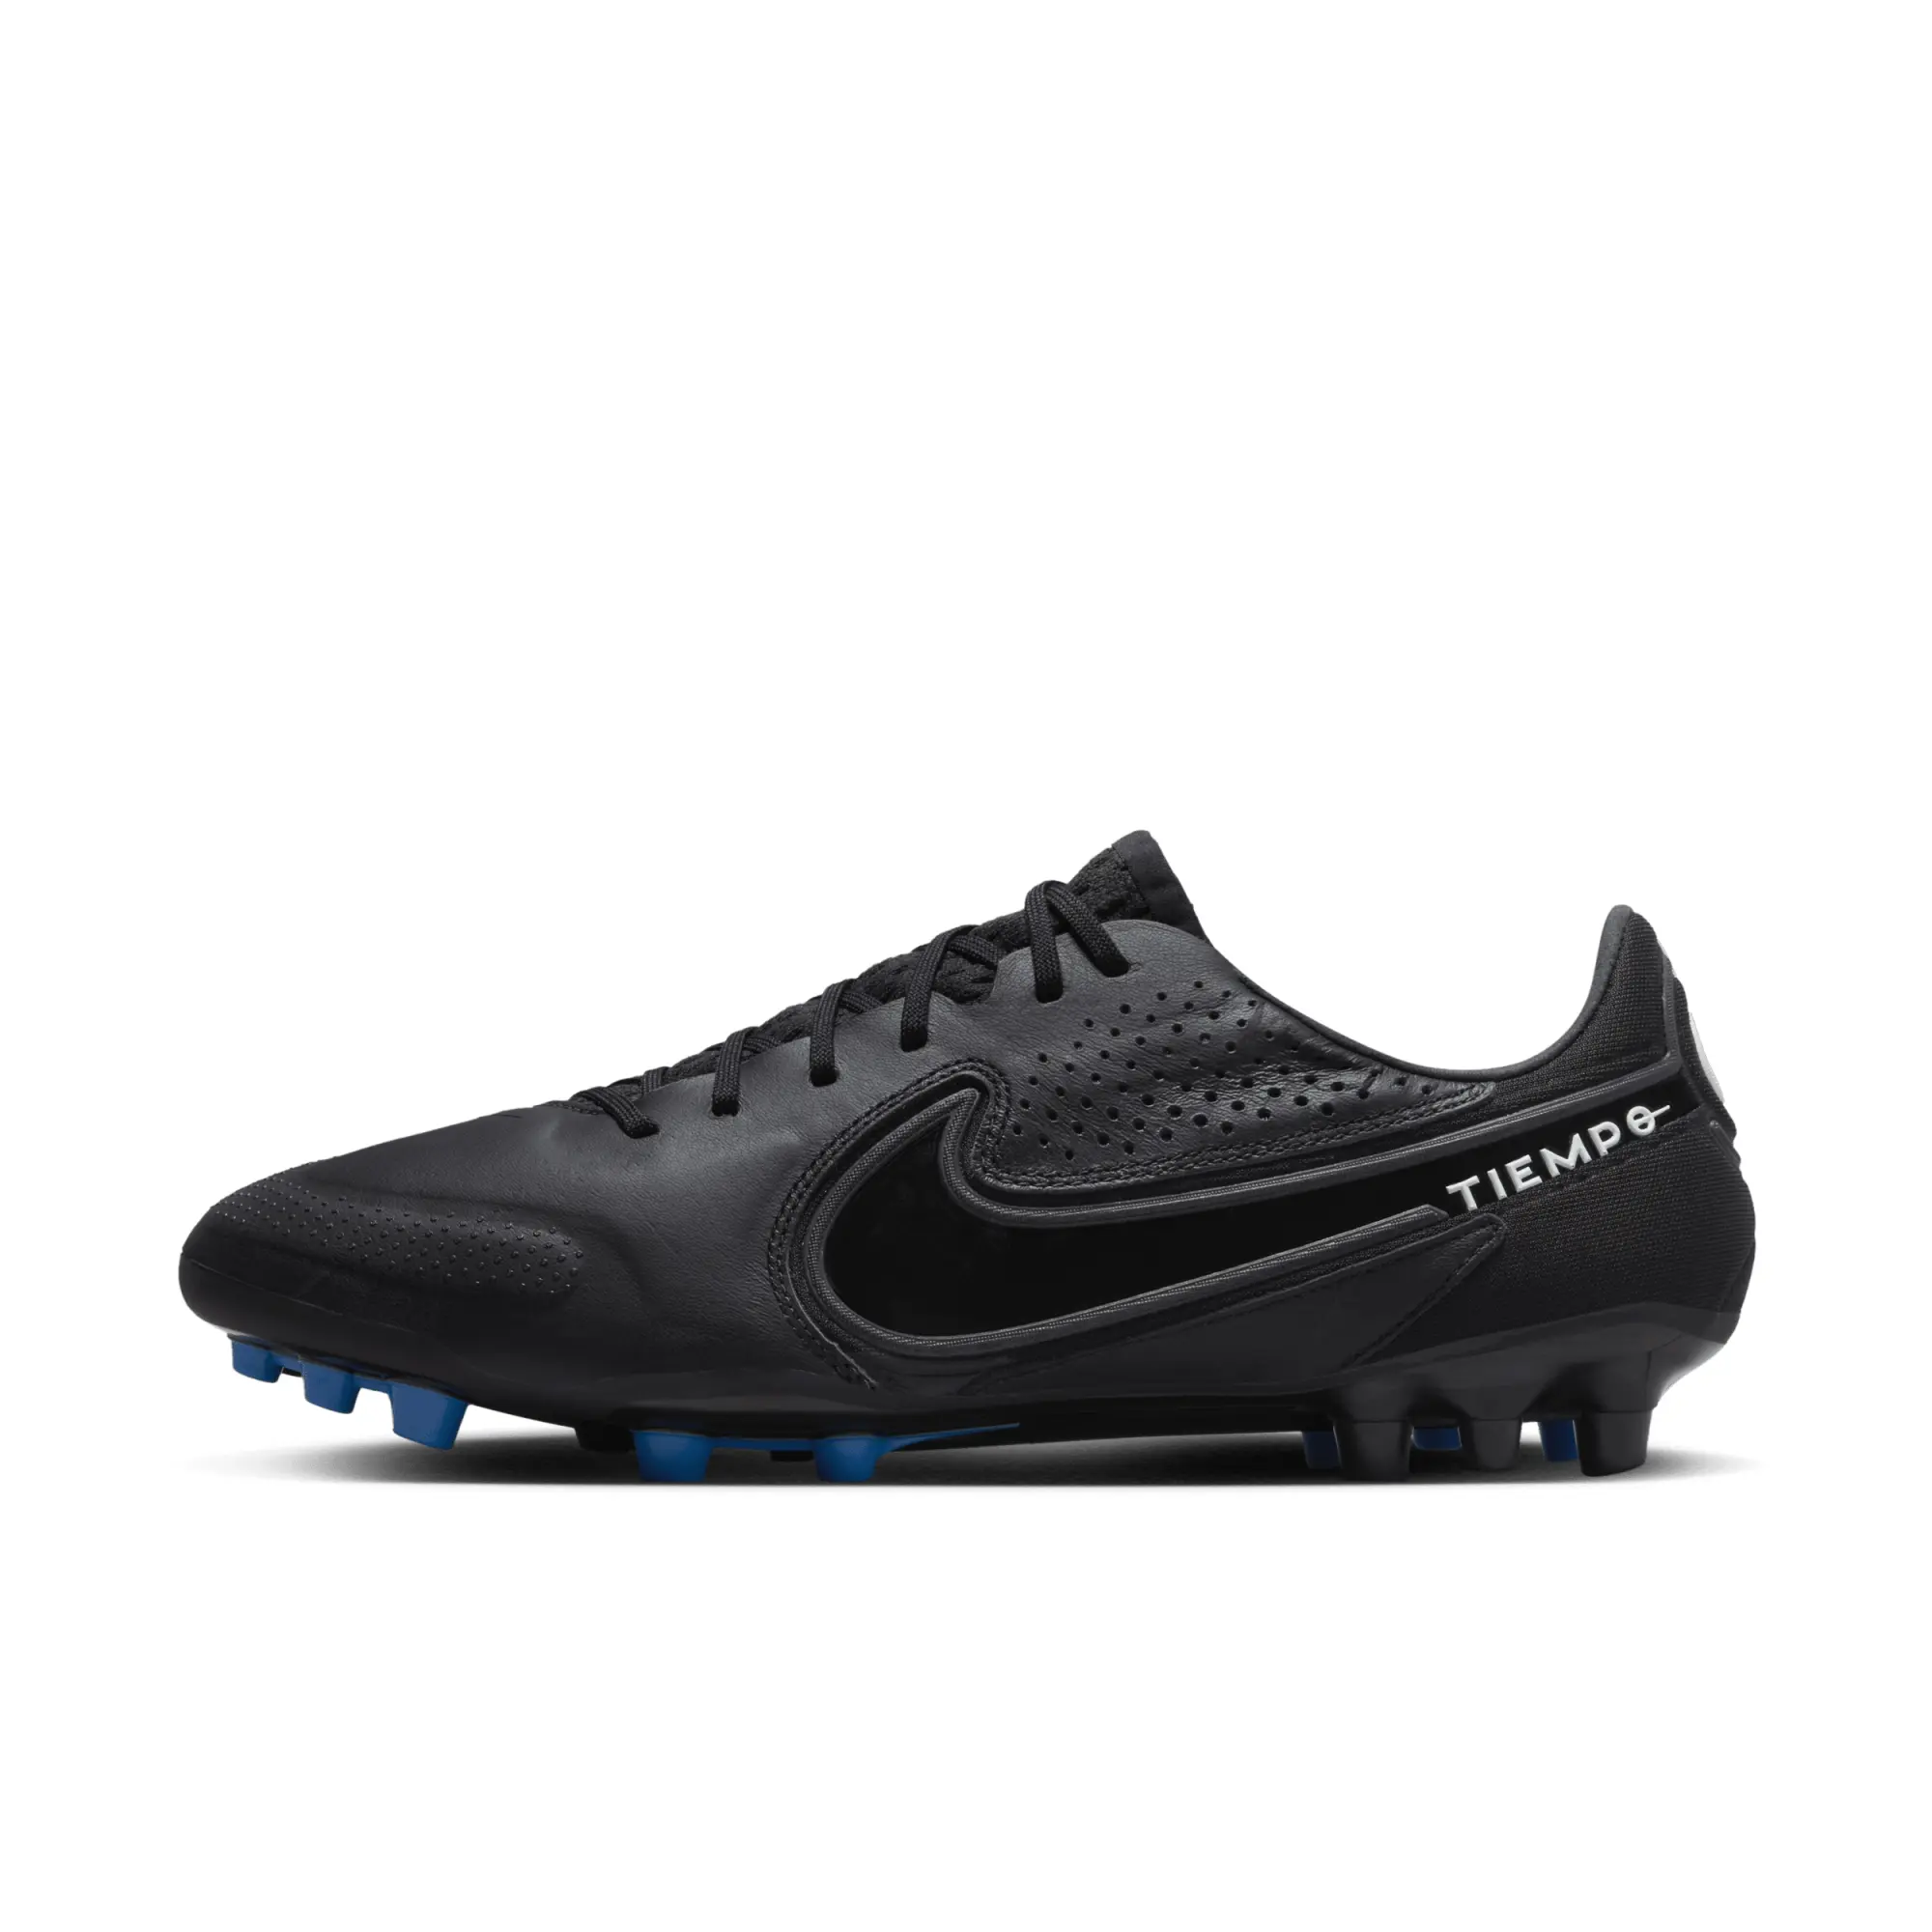 Nike Tiempo Legend 9 Elite AG-Pro Artificial-Grass Football Boot - Black